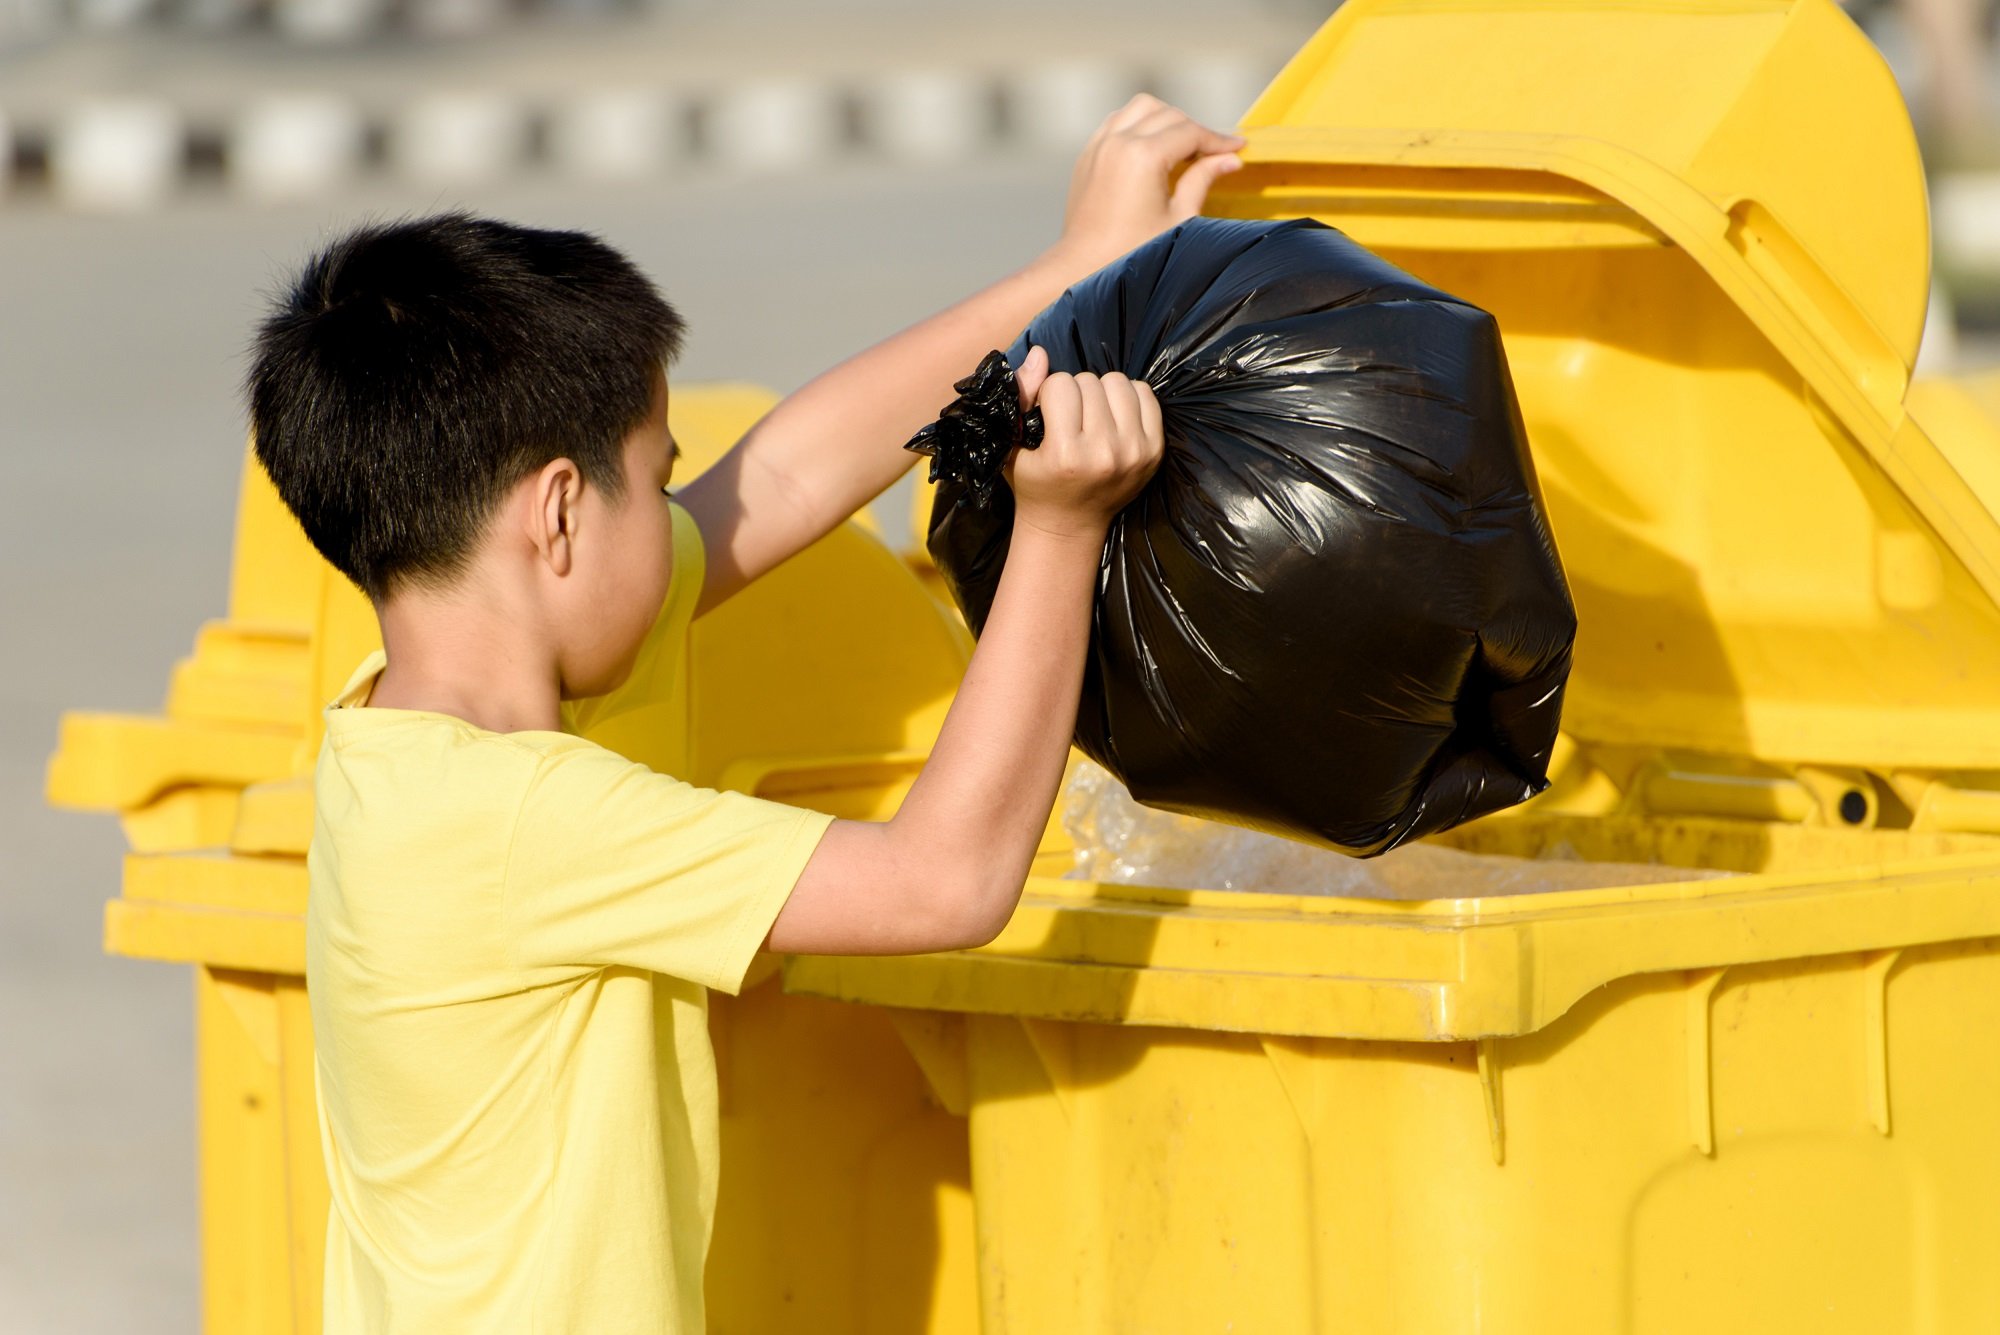 Chico saca la basura. | Foto: Shutterstock